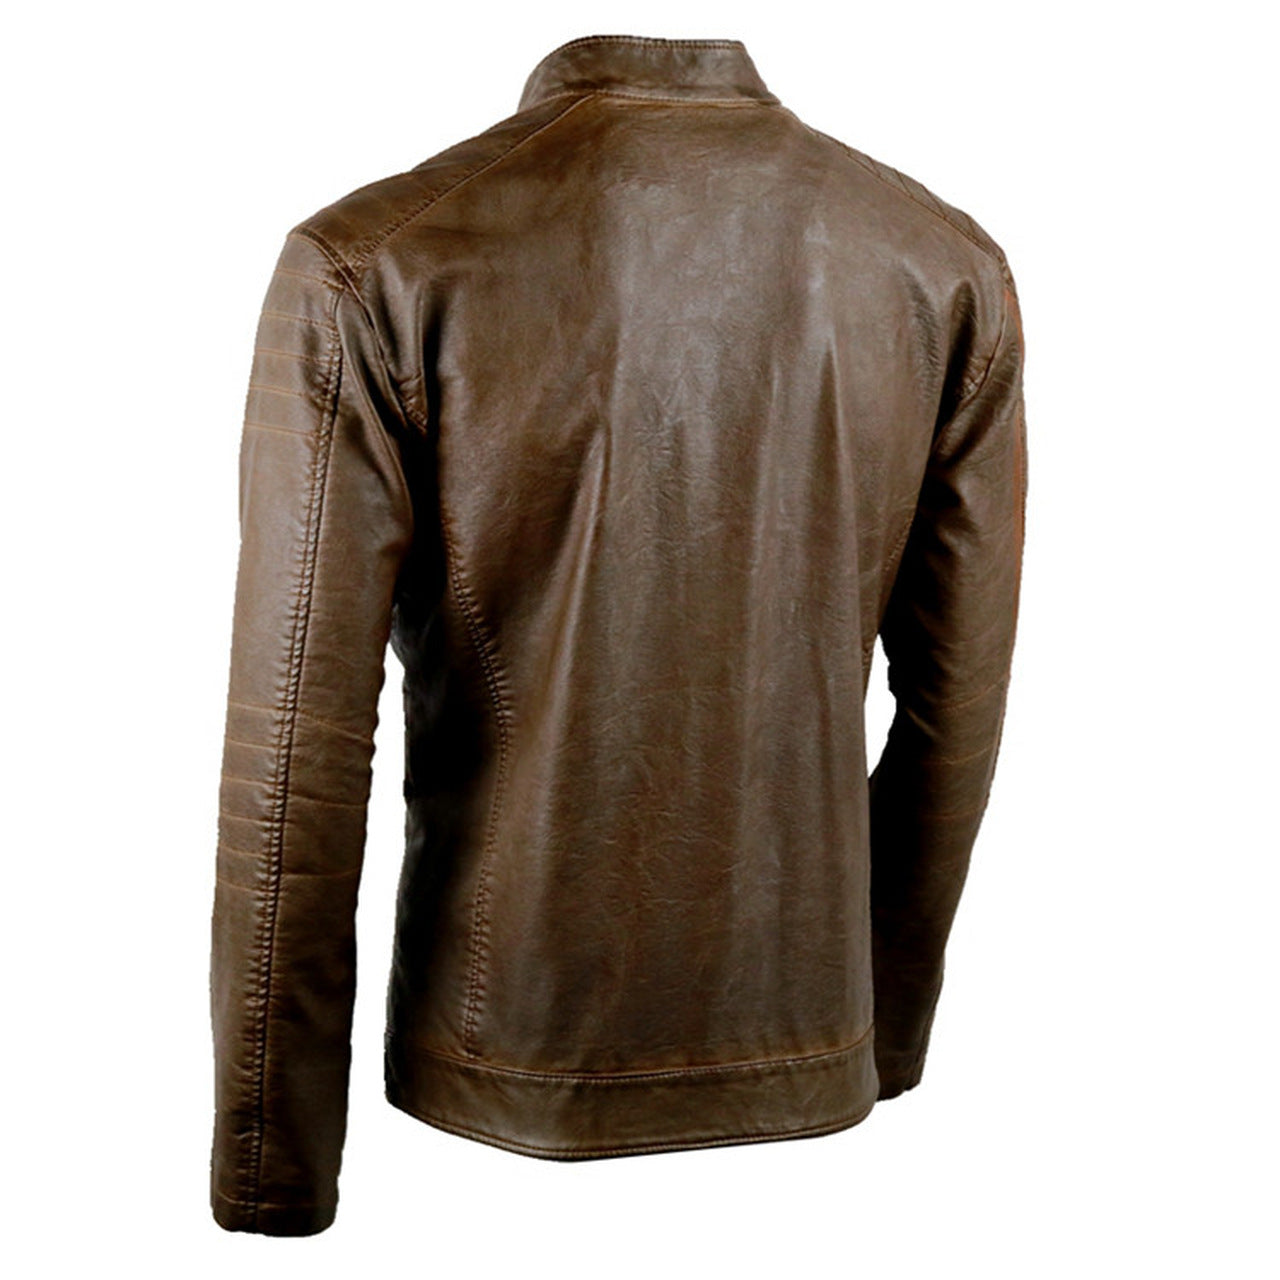 Men Genuine Sheepskin Leather Jacket Coat With Zipper pockets in Camel Color